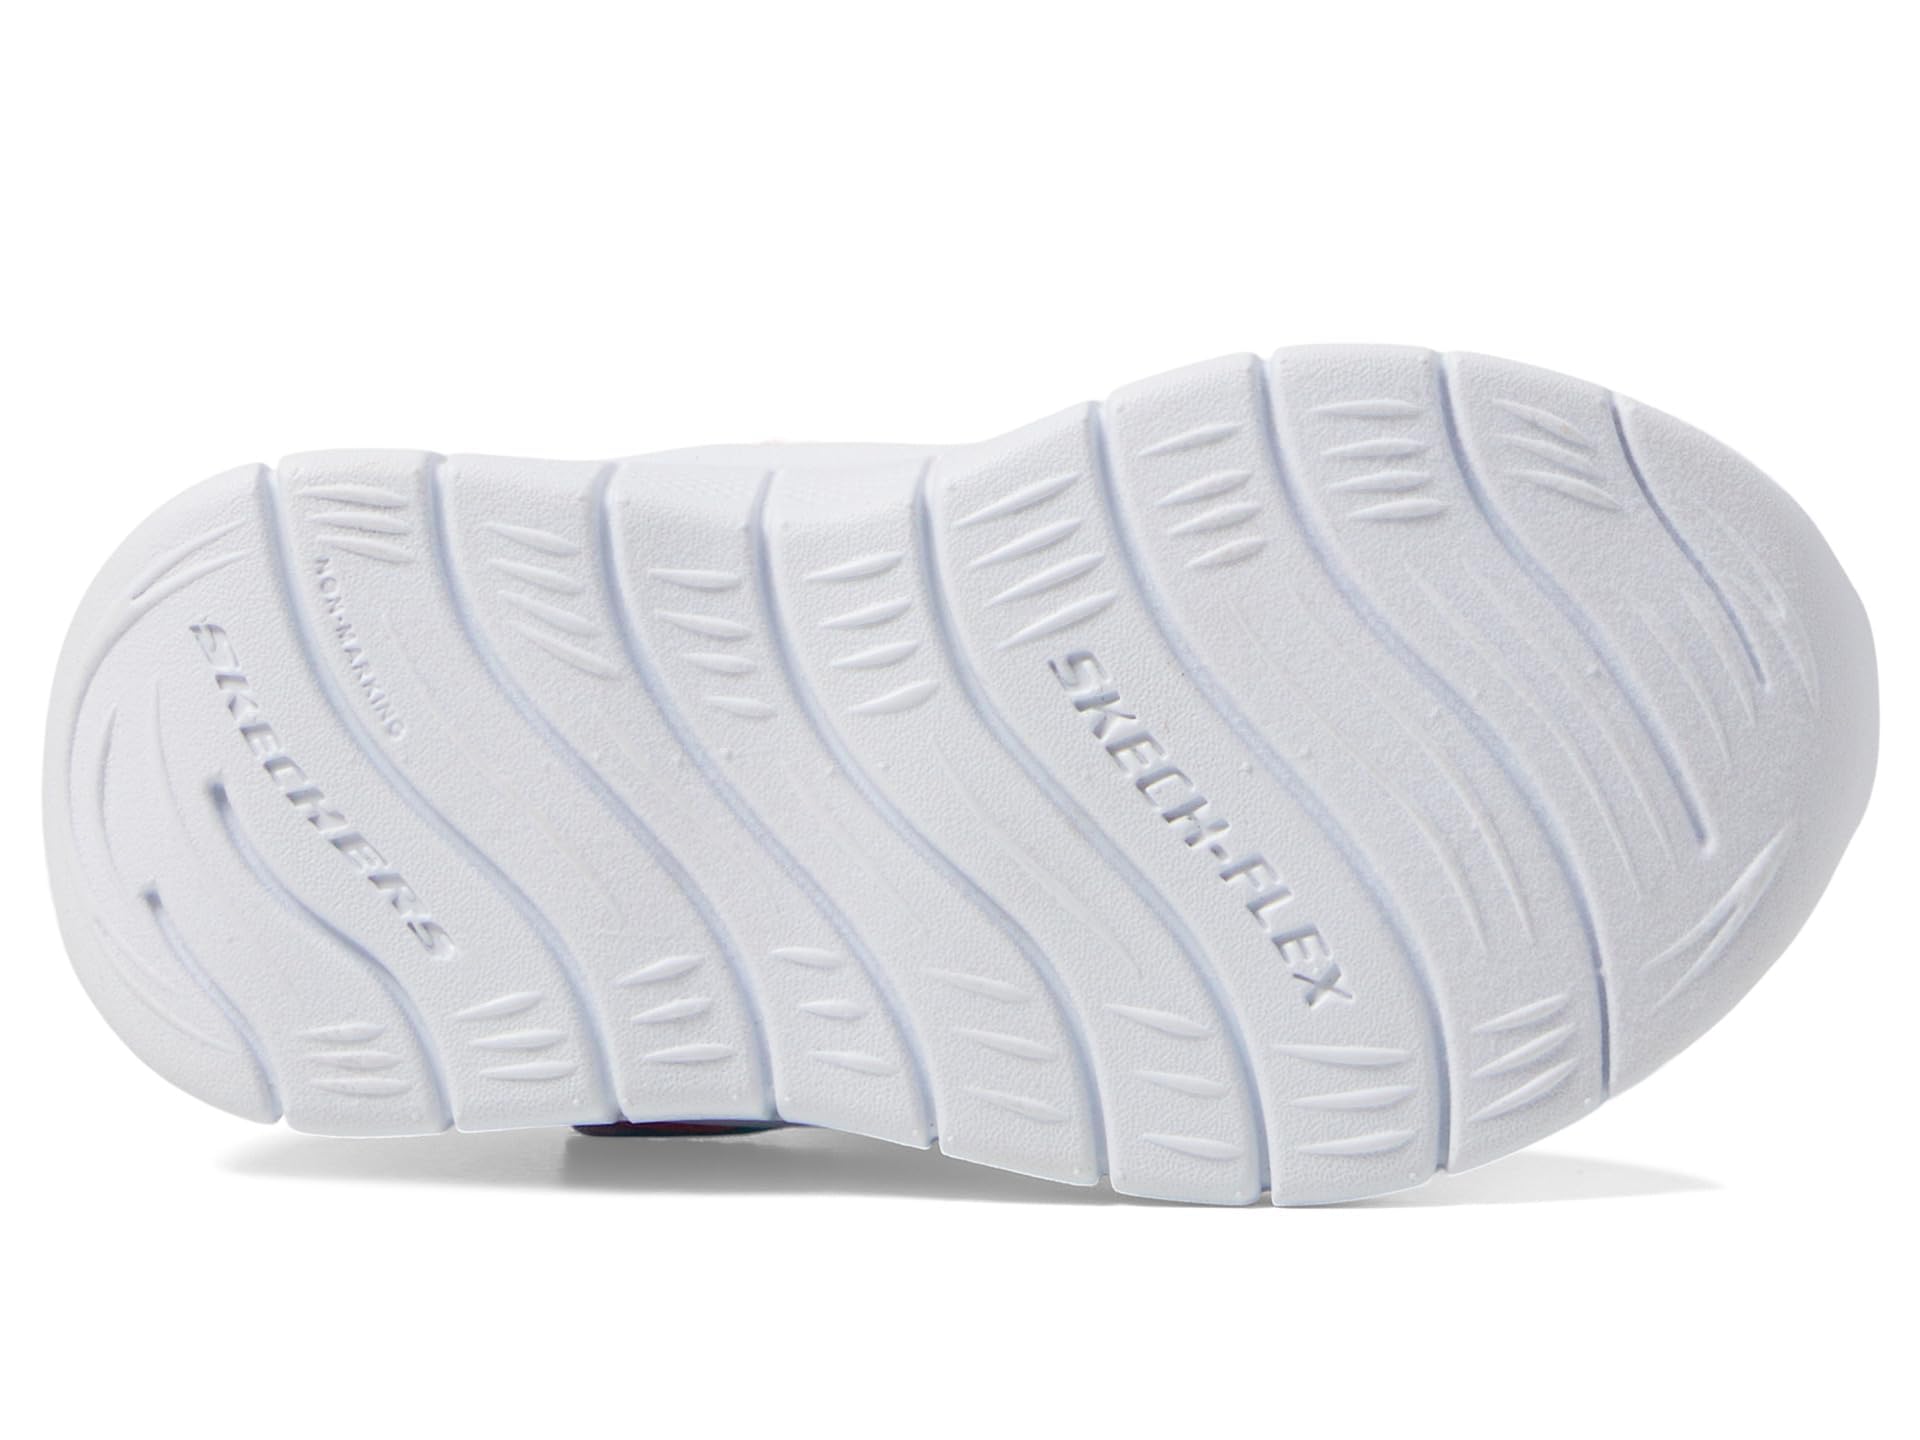 Skechers Unisex-Child Comfy Flex 3.0 Sneaker